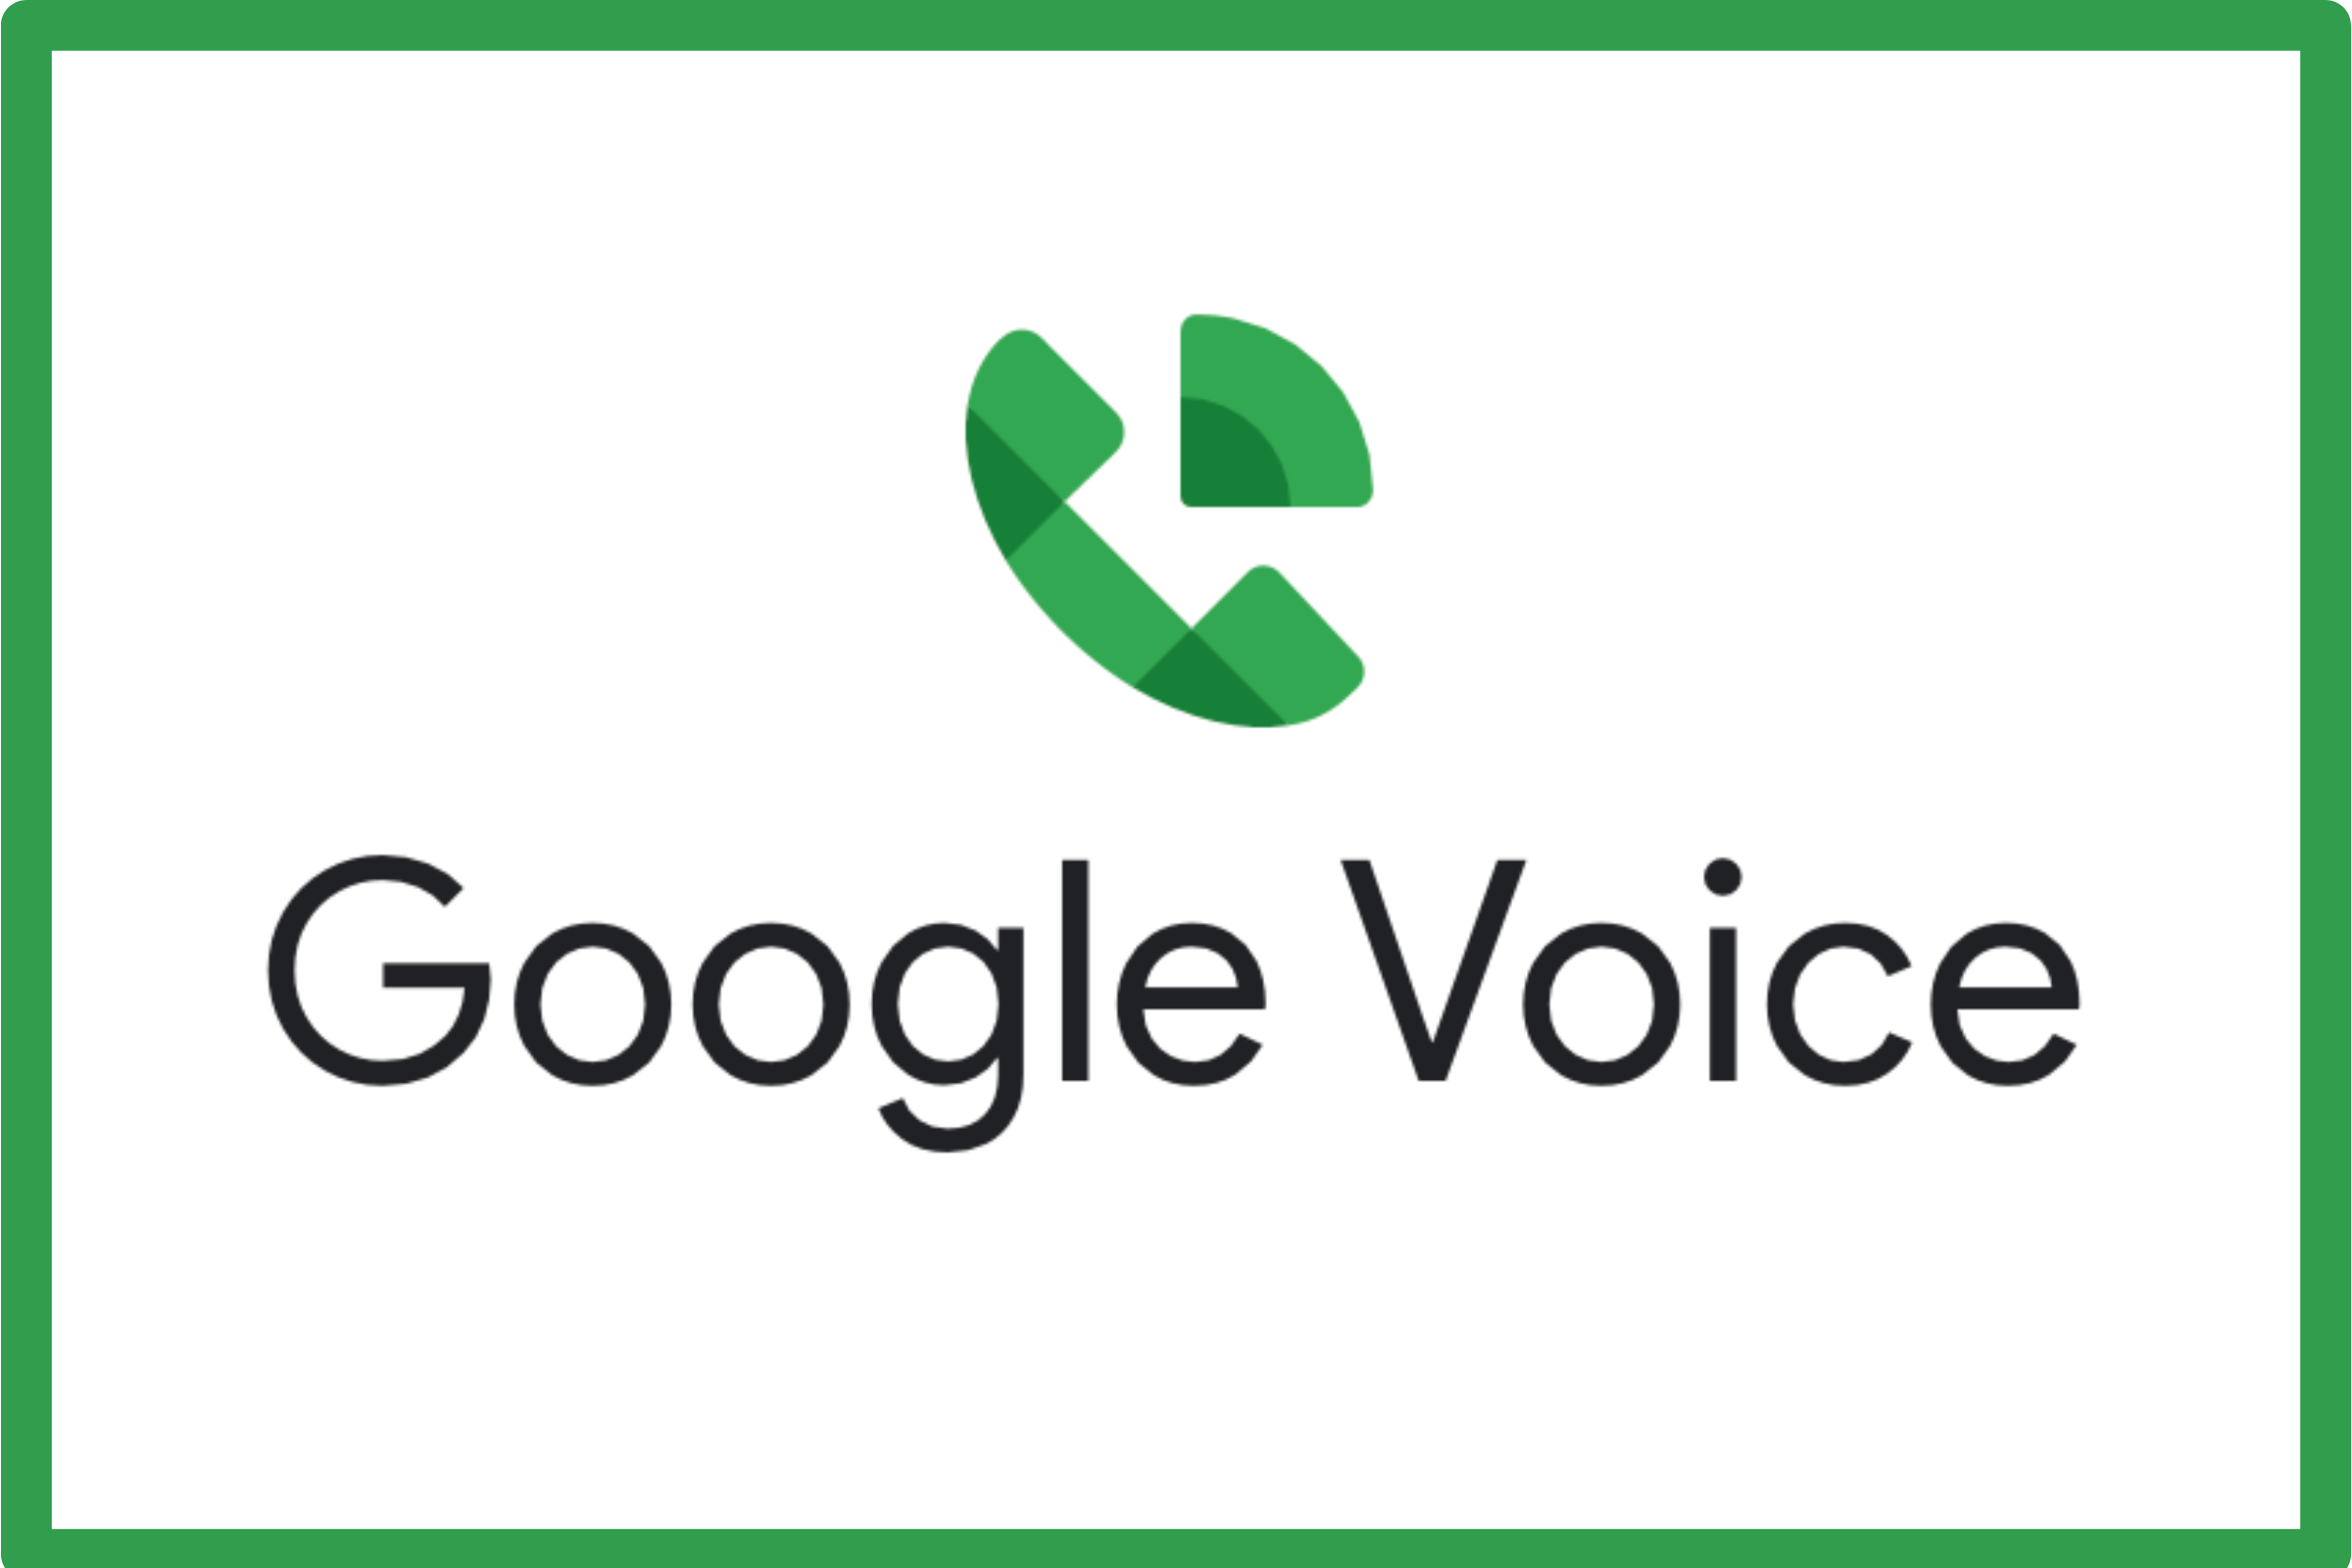 Google Voice logo with a green frame 